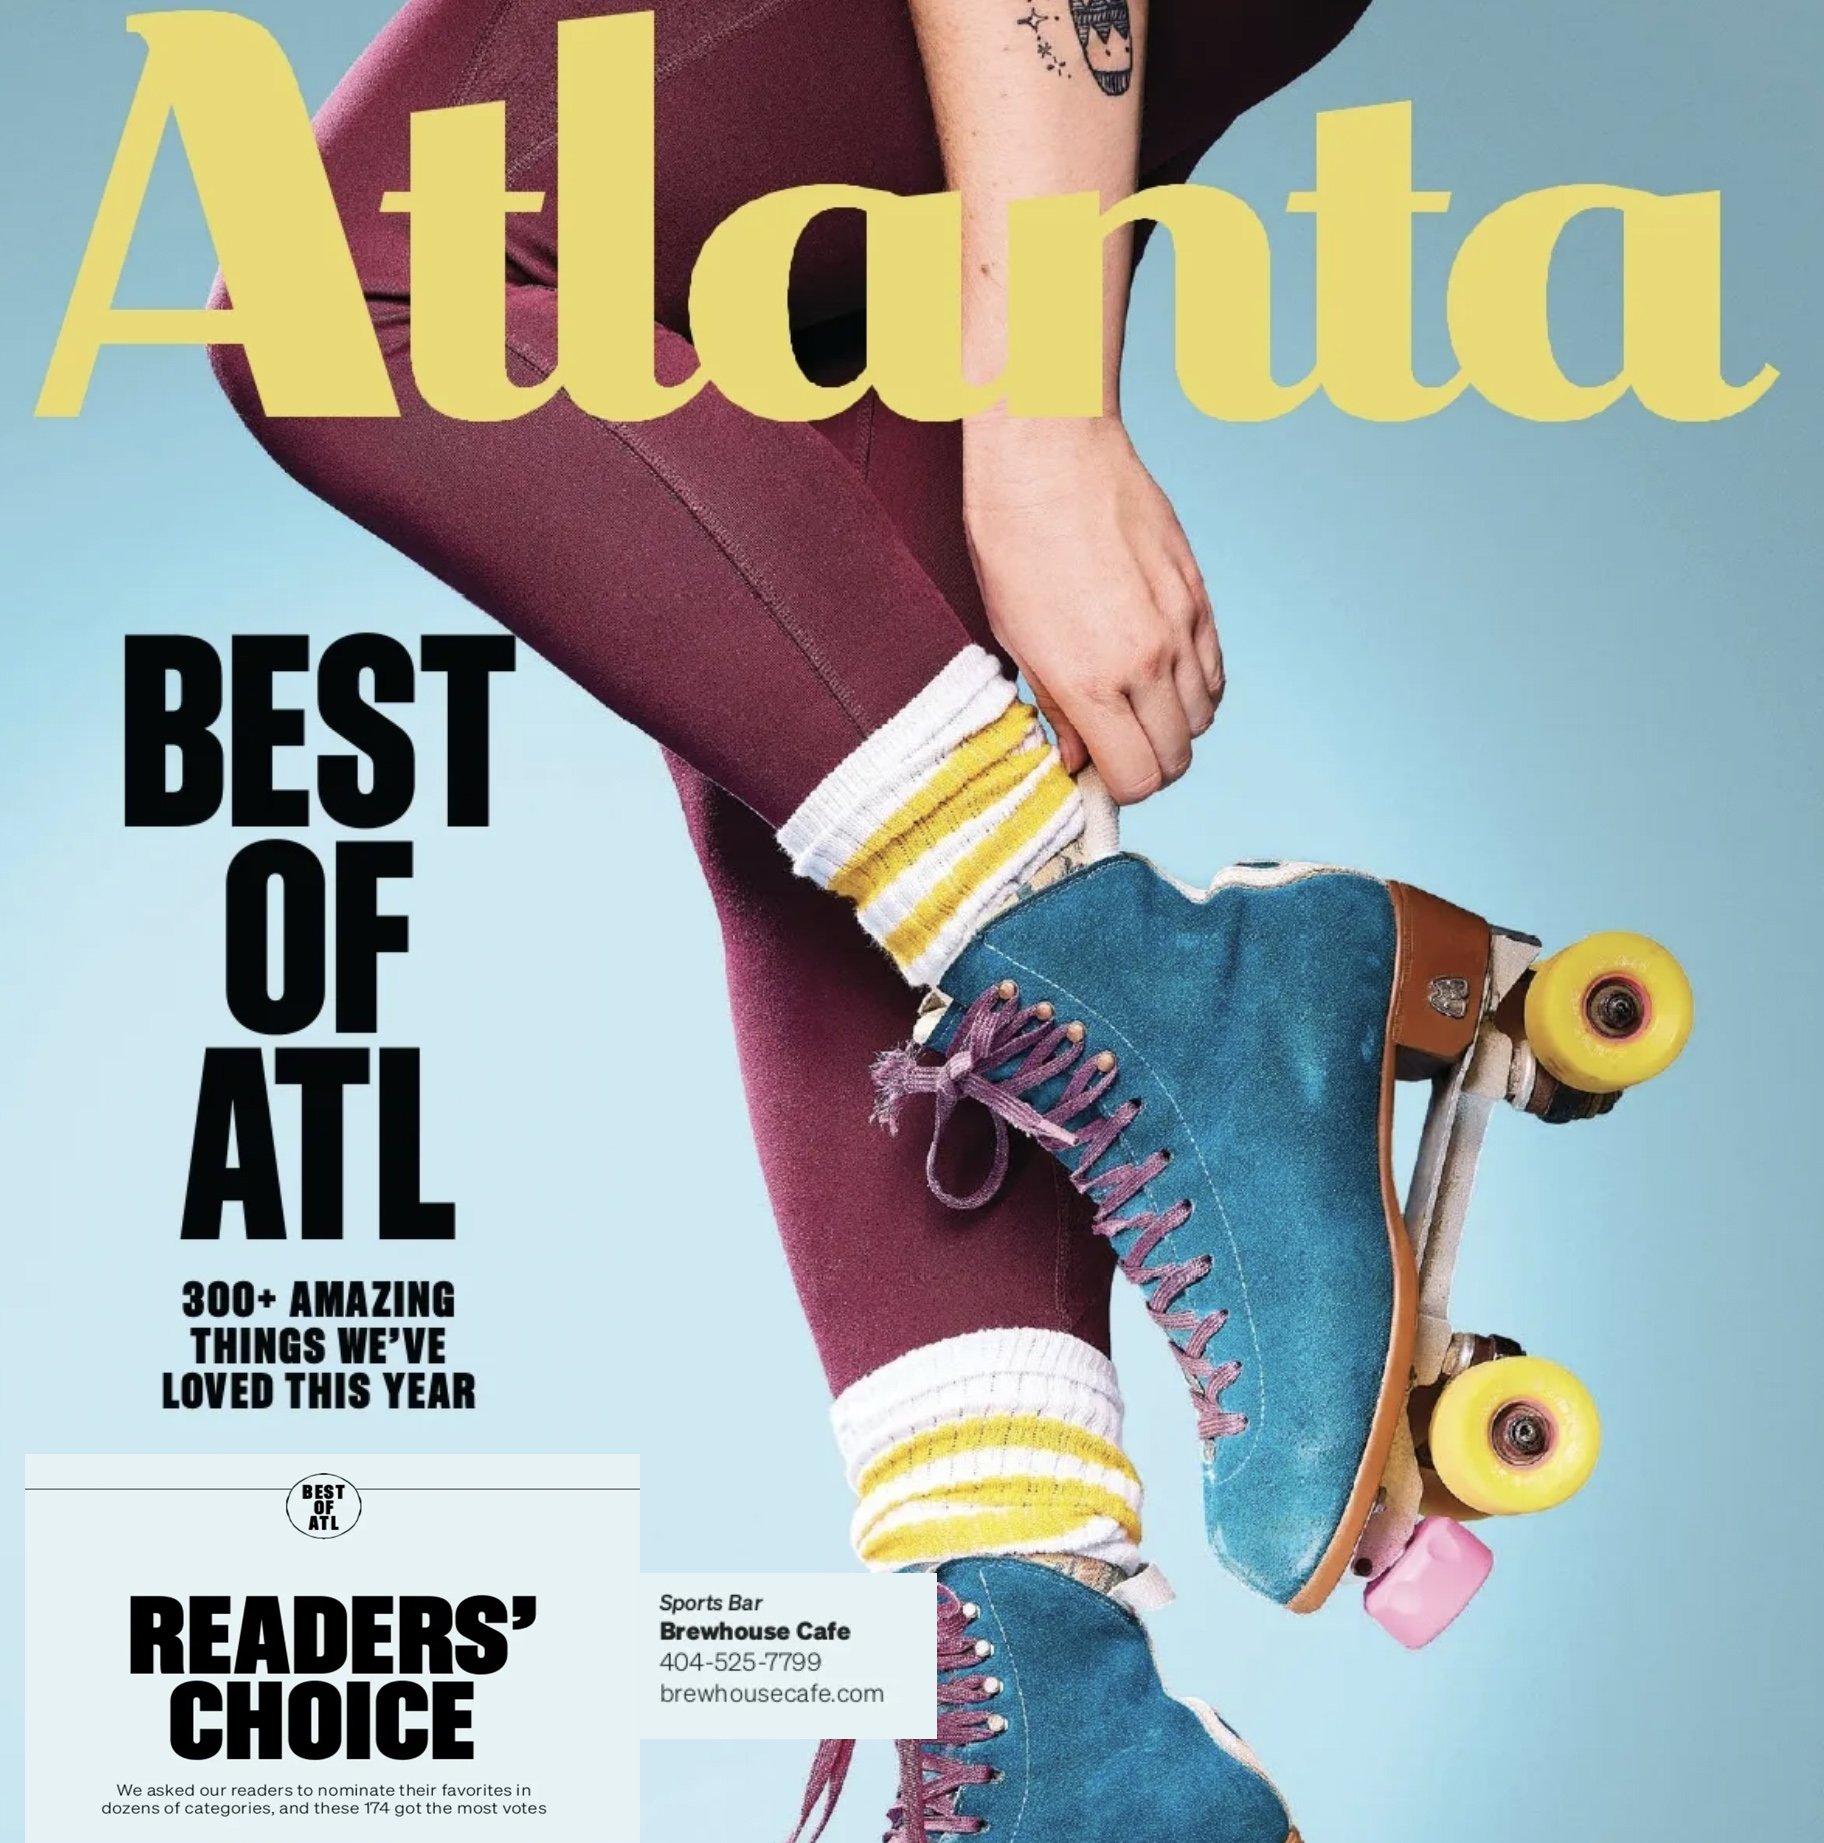 Atlantamagazine_site.jpg